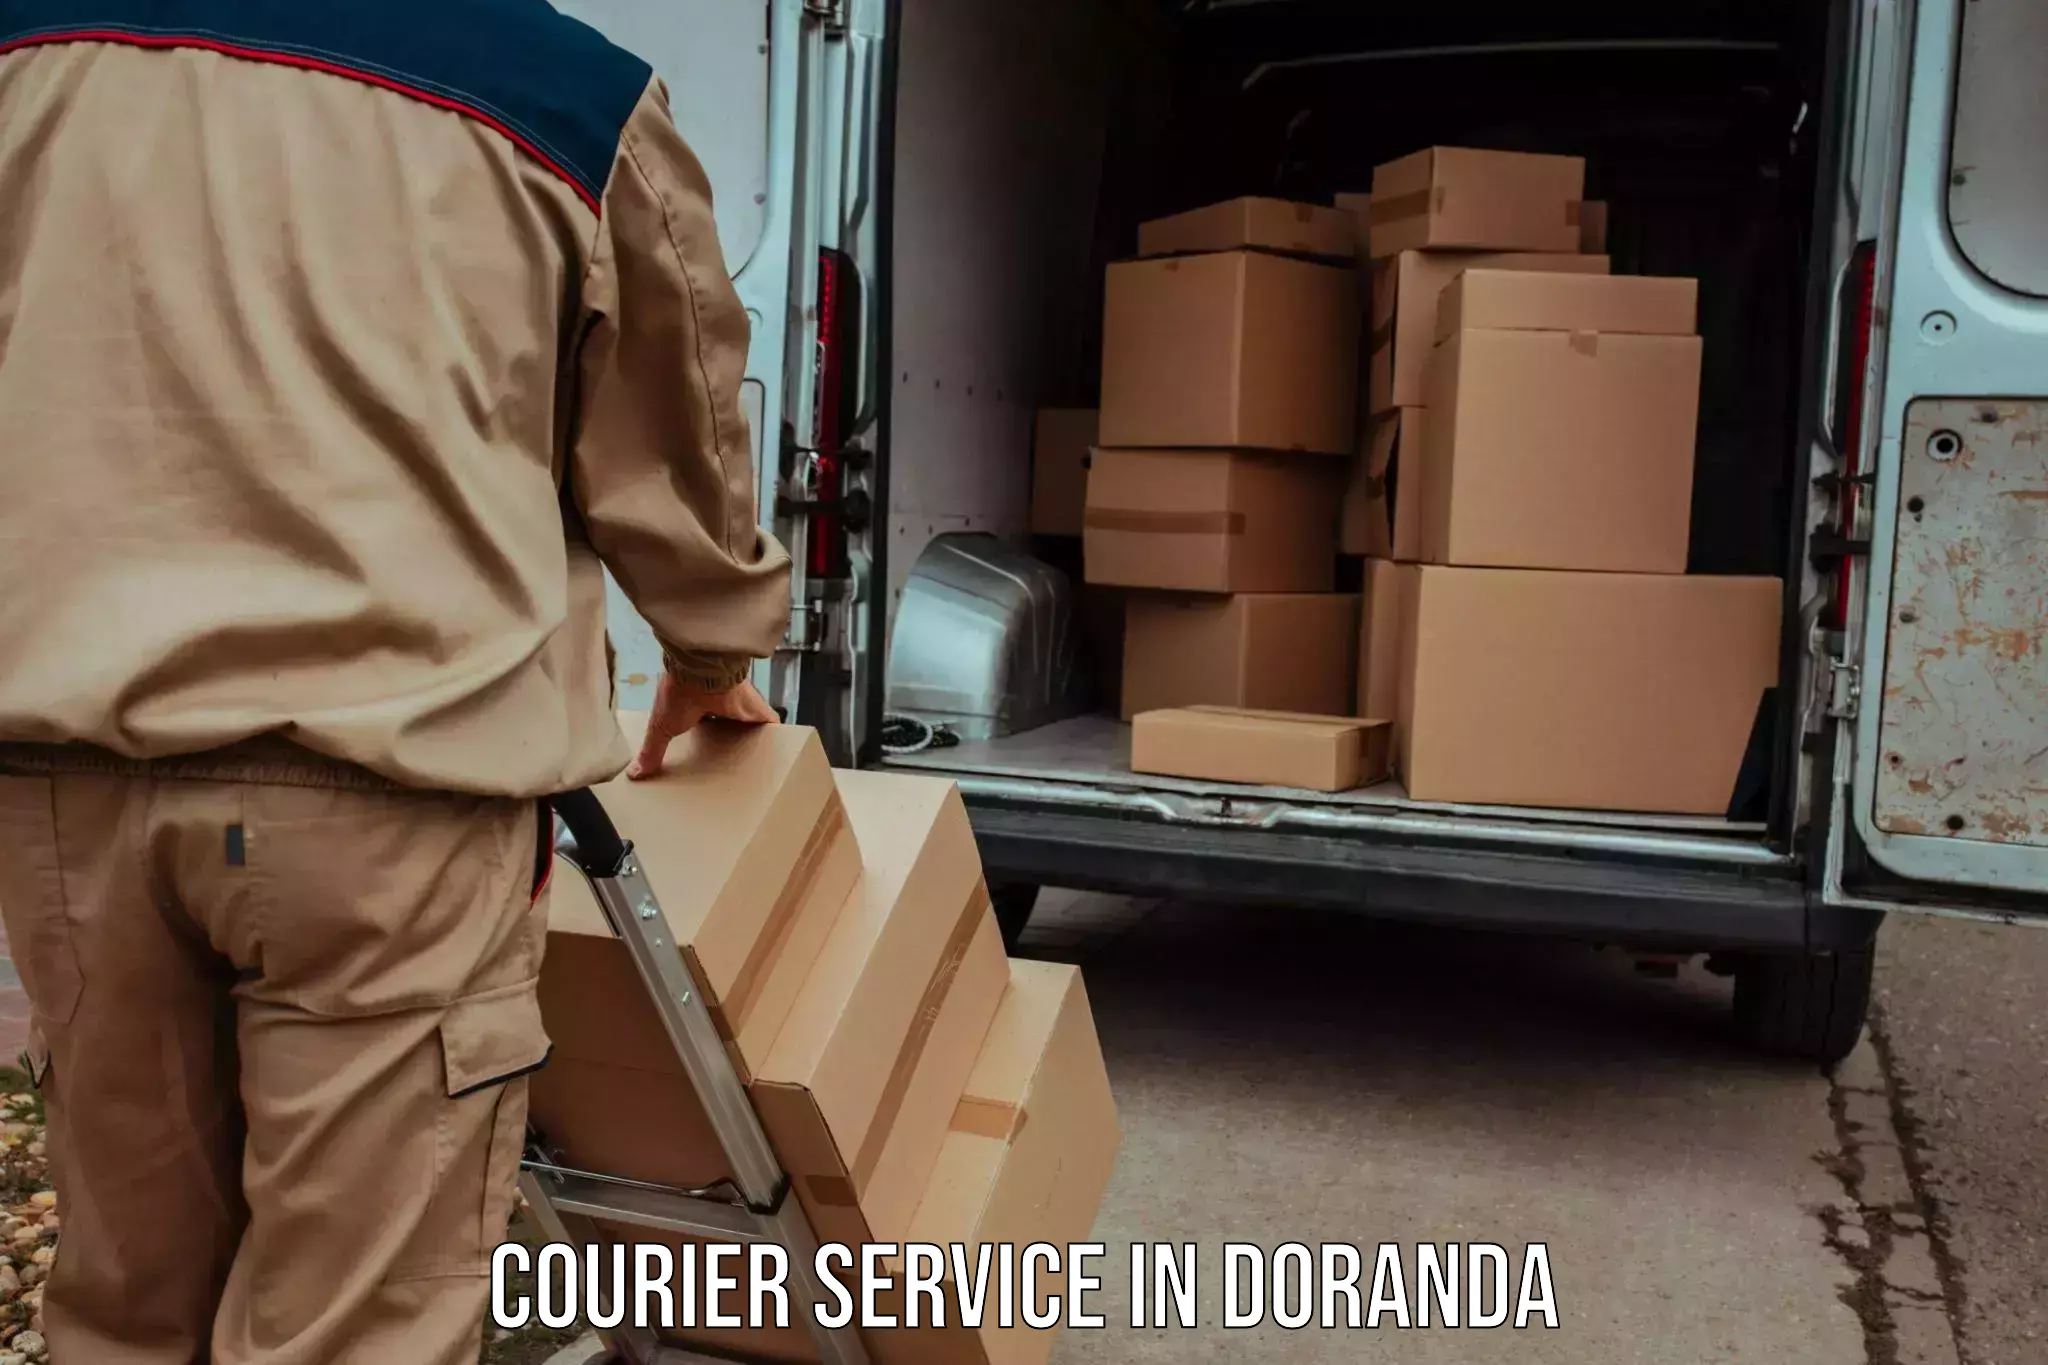 Medical delivery services in Doranda